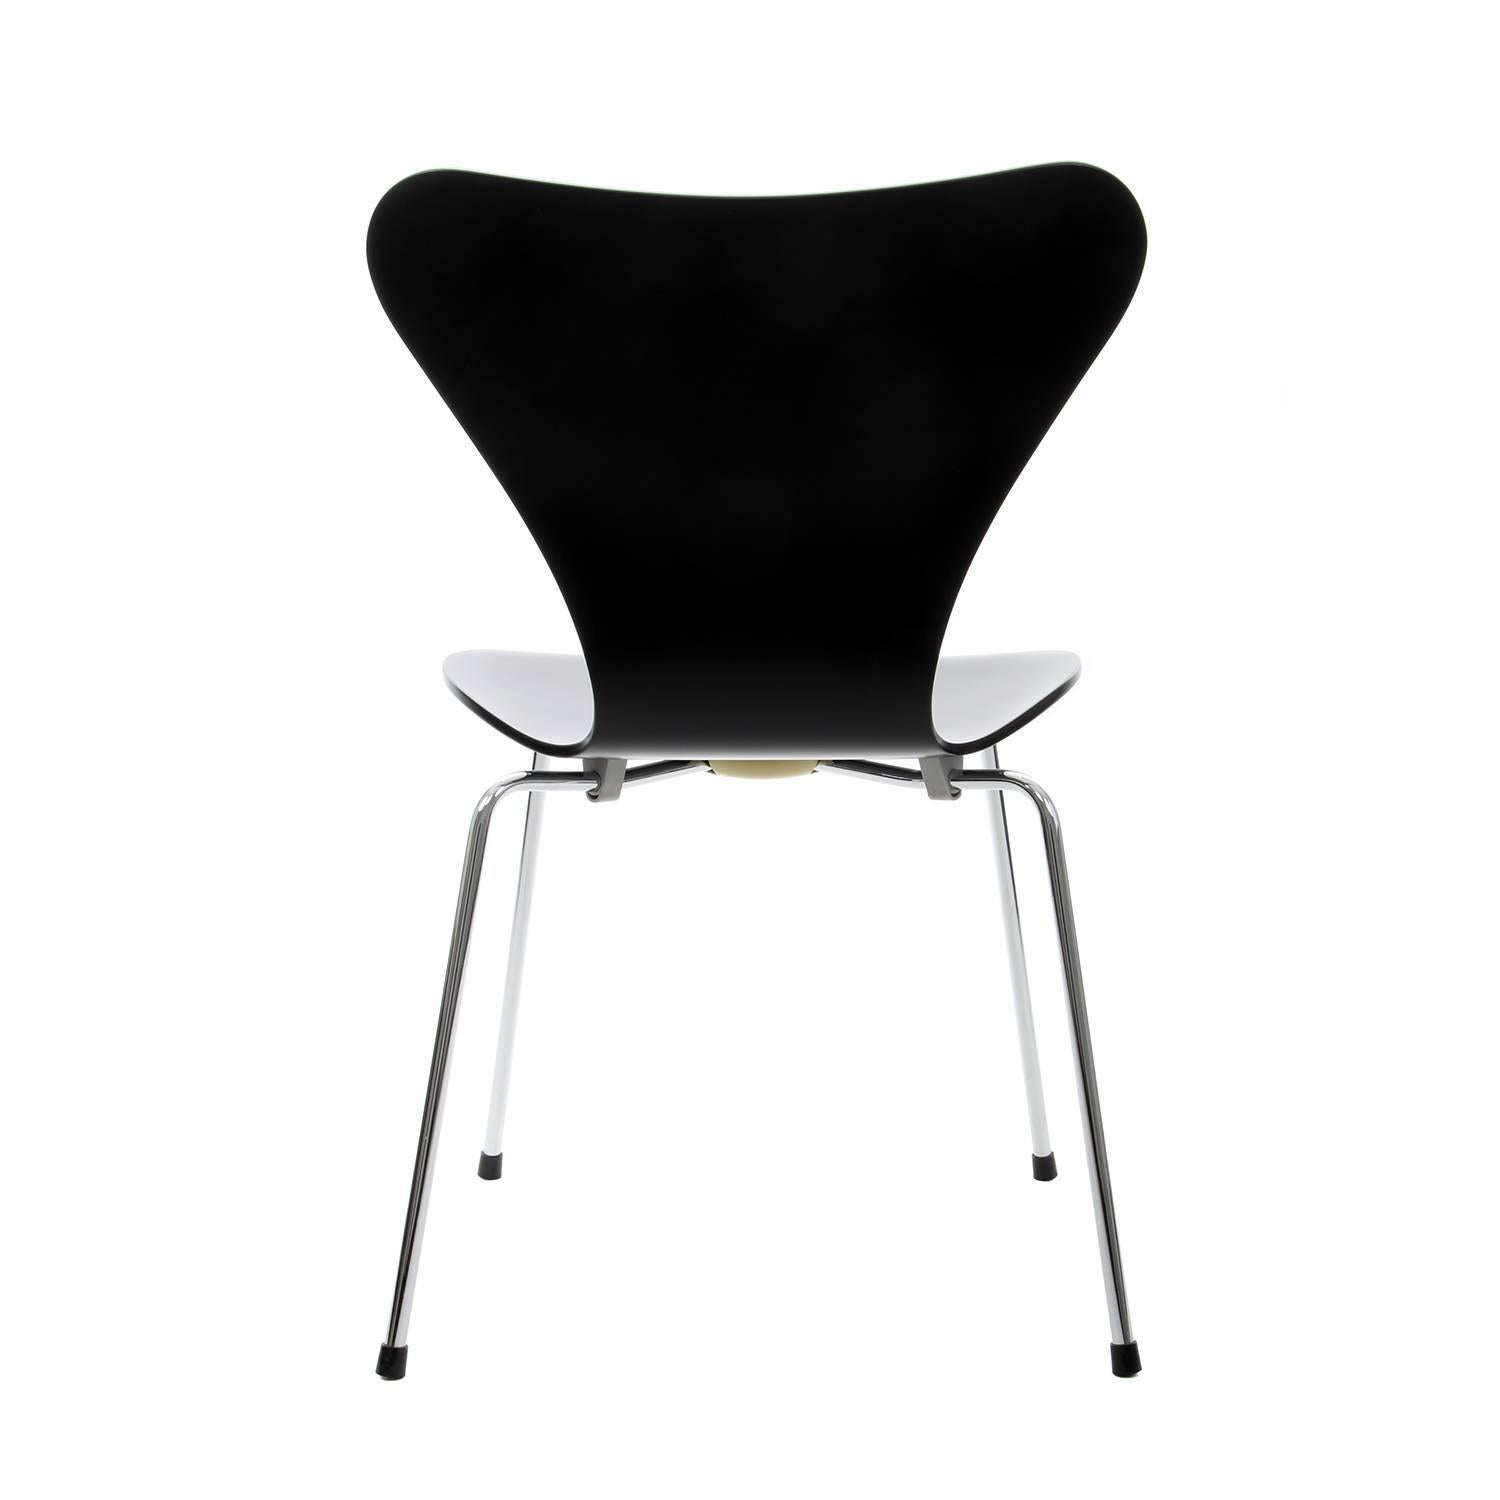 Danish Series 7 Chair by Arne Jacobsen, for Fritz Hansen 1955. Professionally Restored For Sale